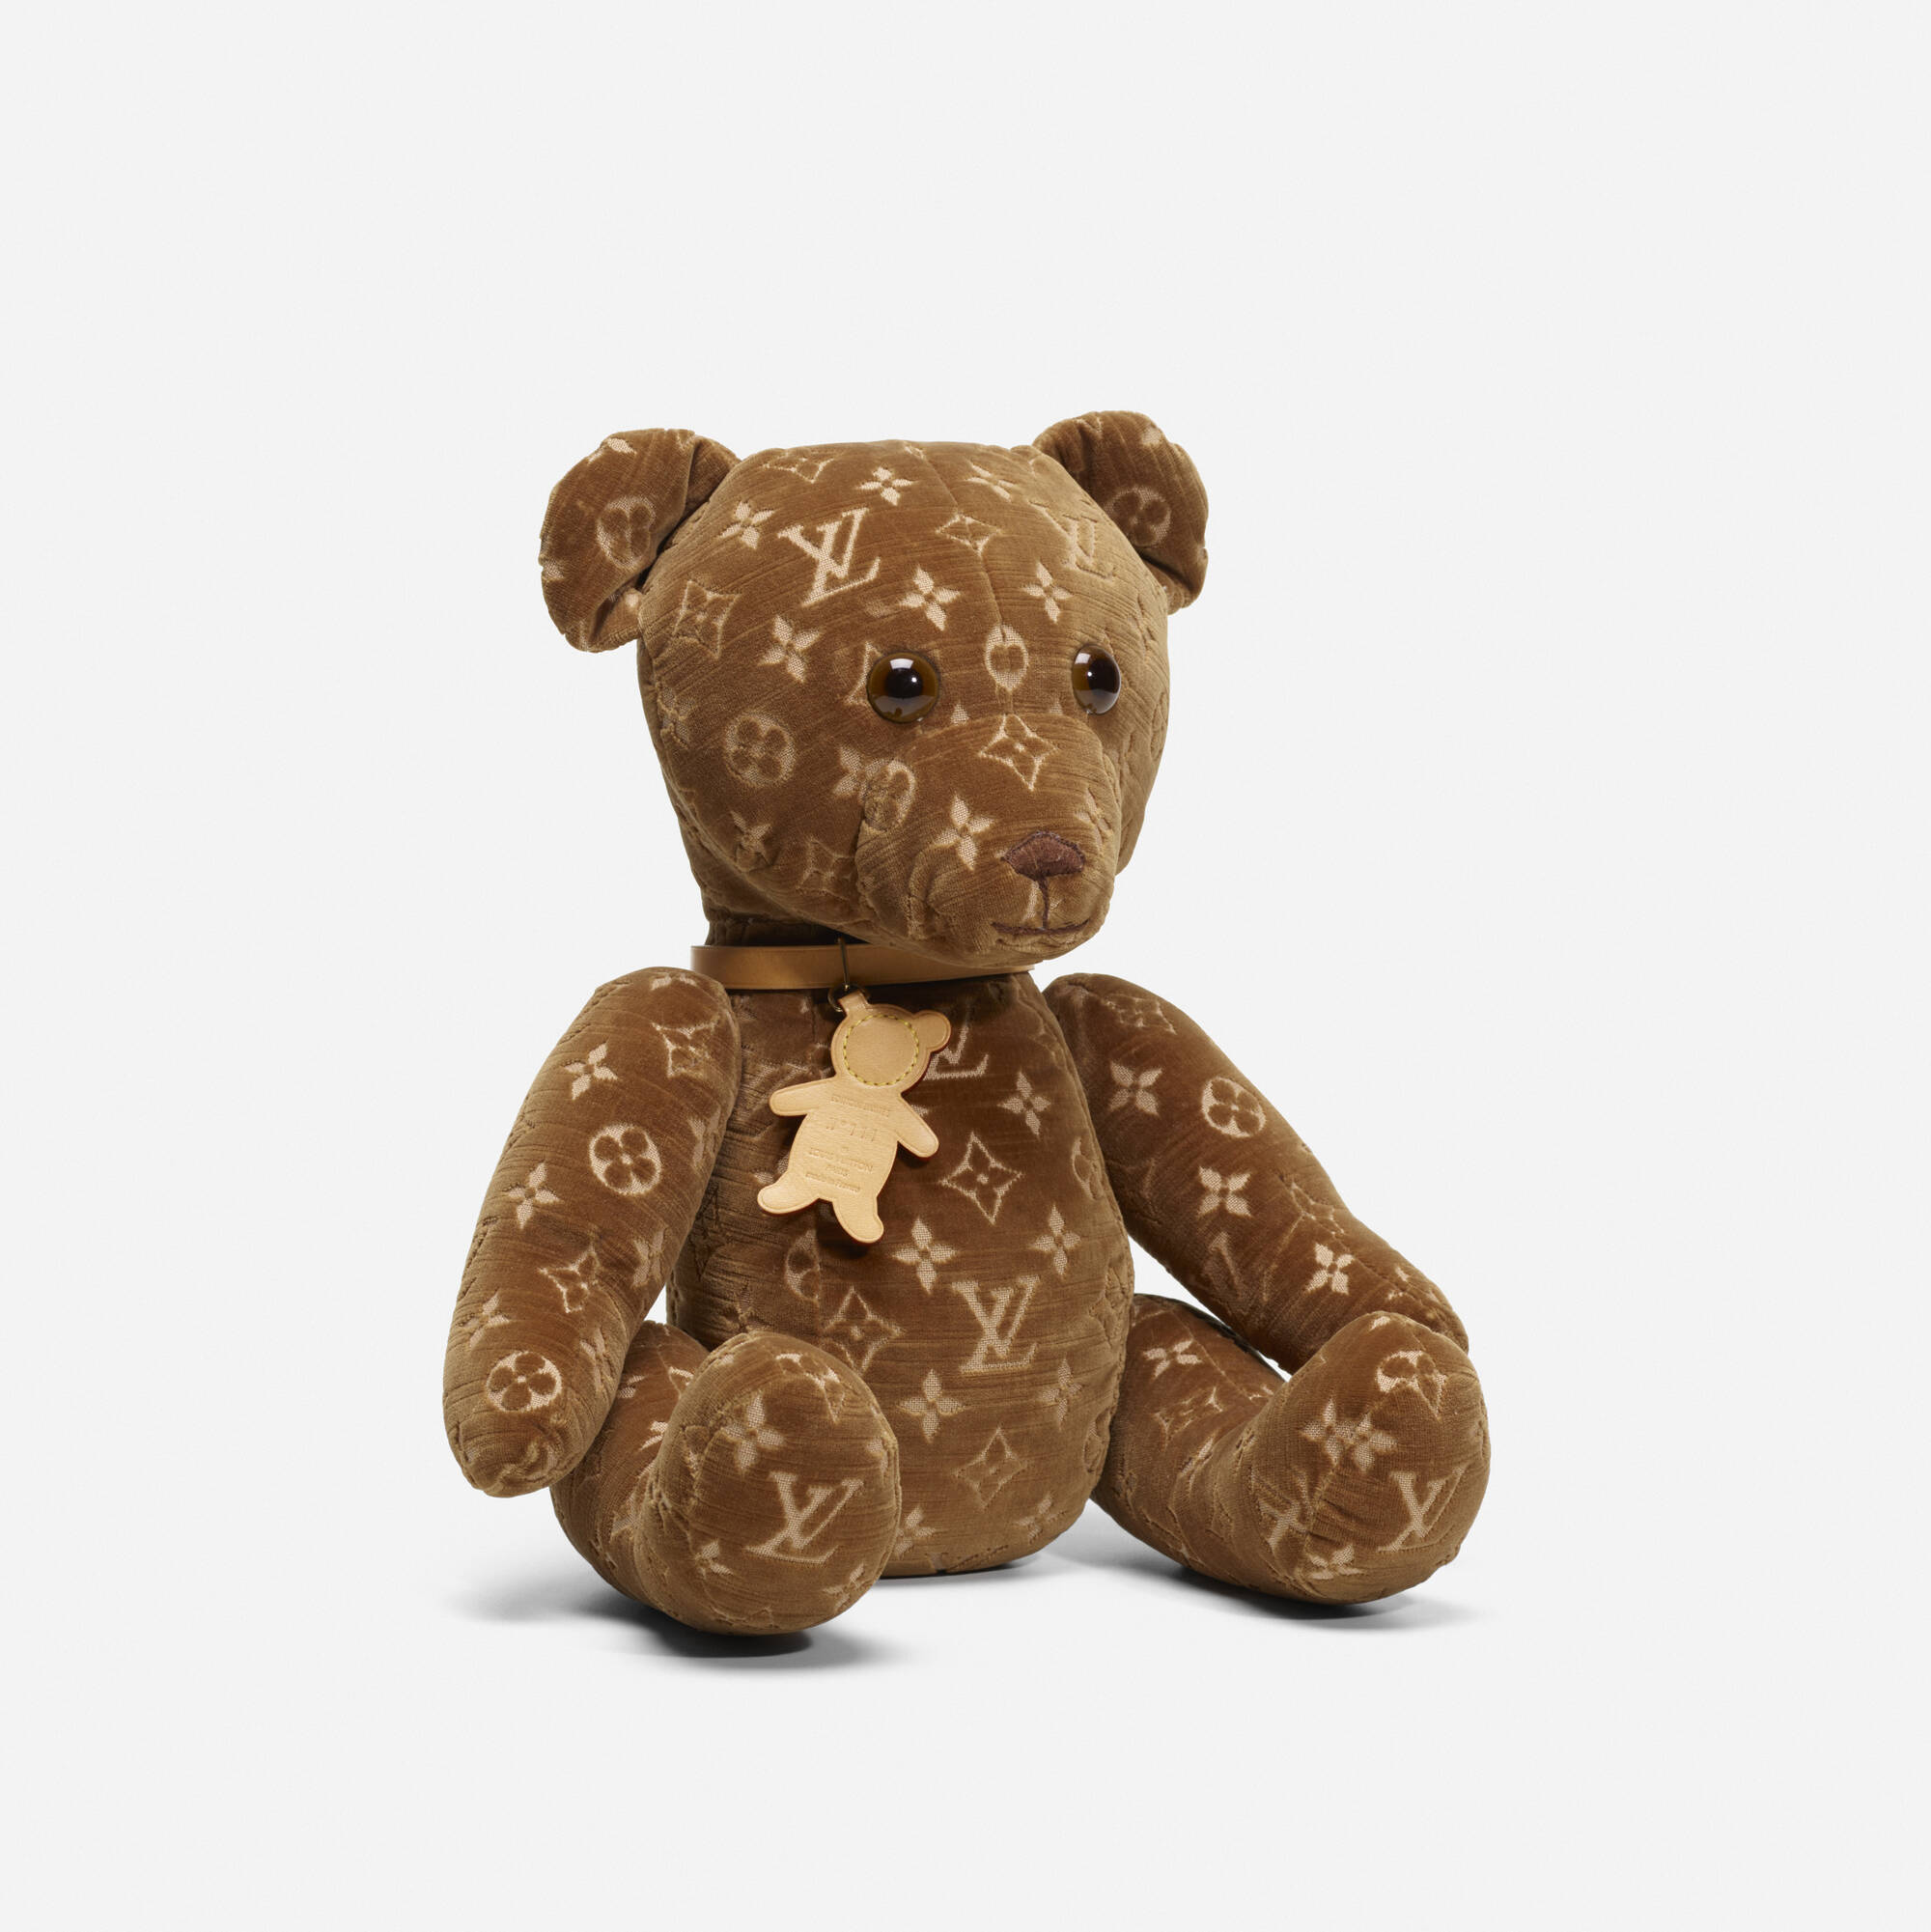 142: LOUIS VUITTON, DouDou teddy bear < Art + Design, 23 February 2017 <  Auctions